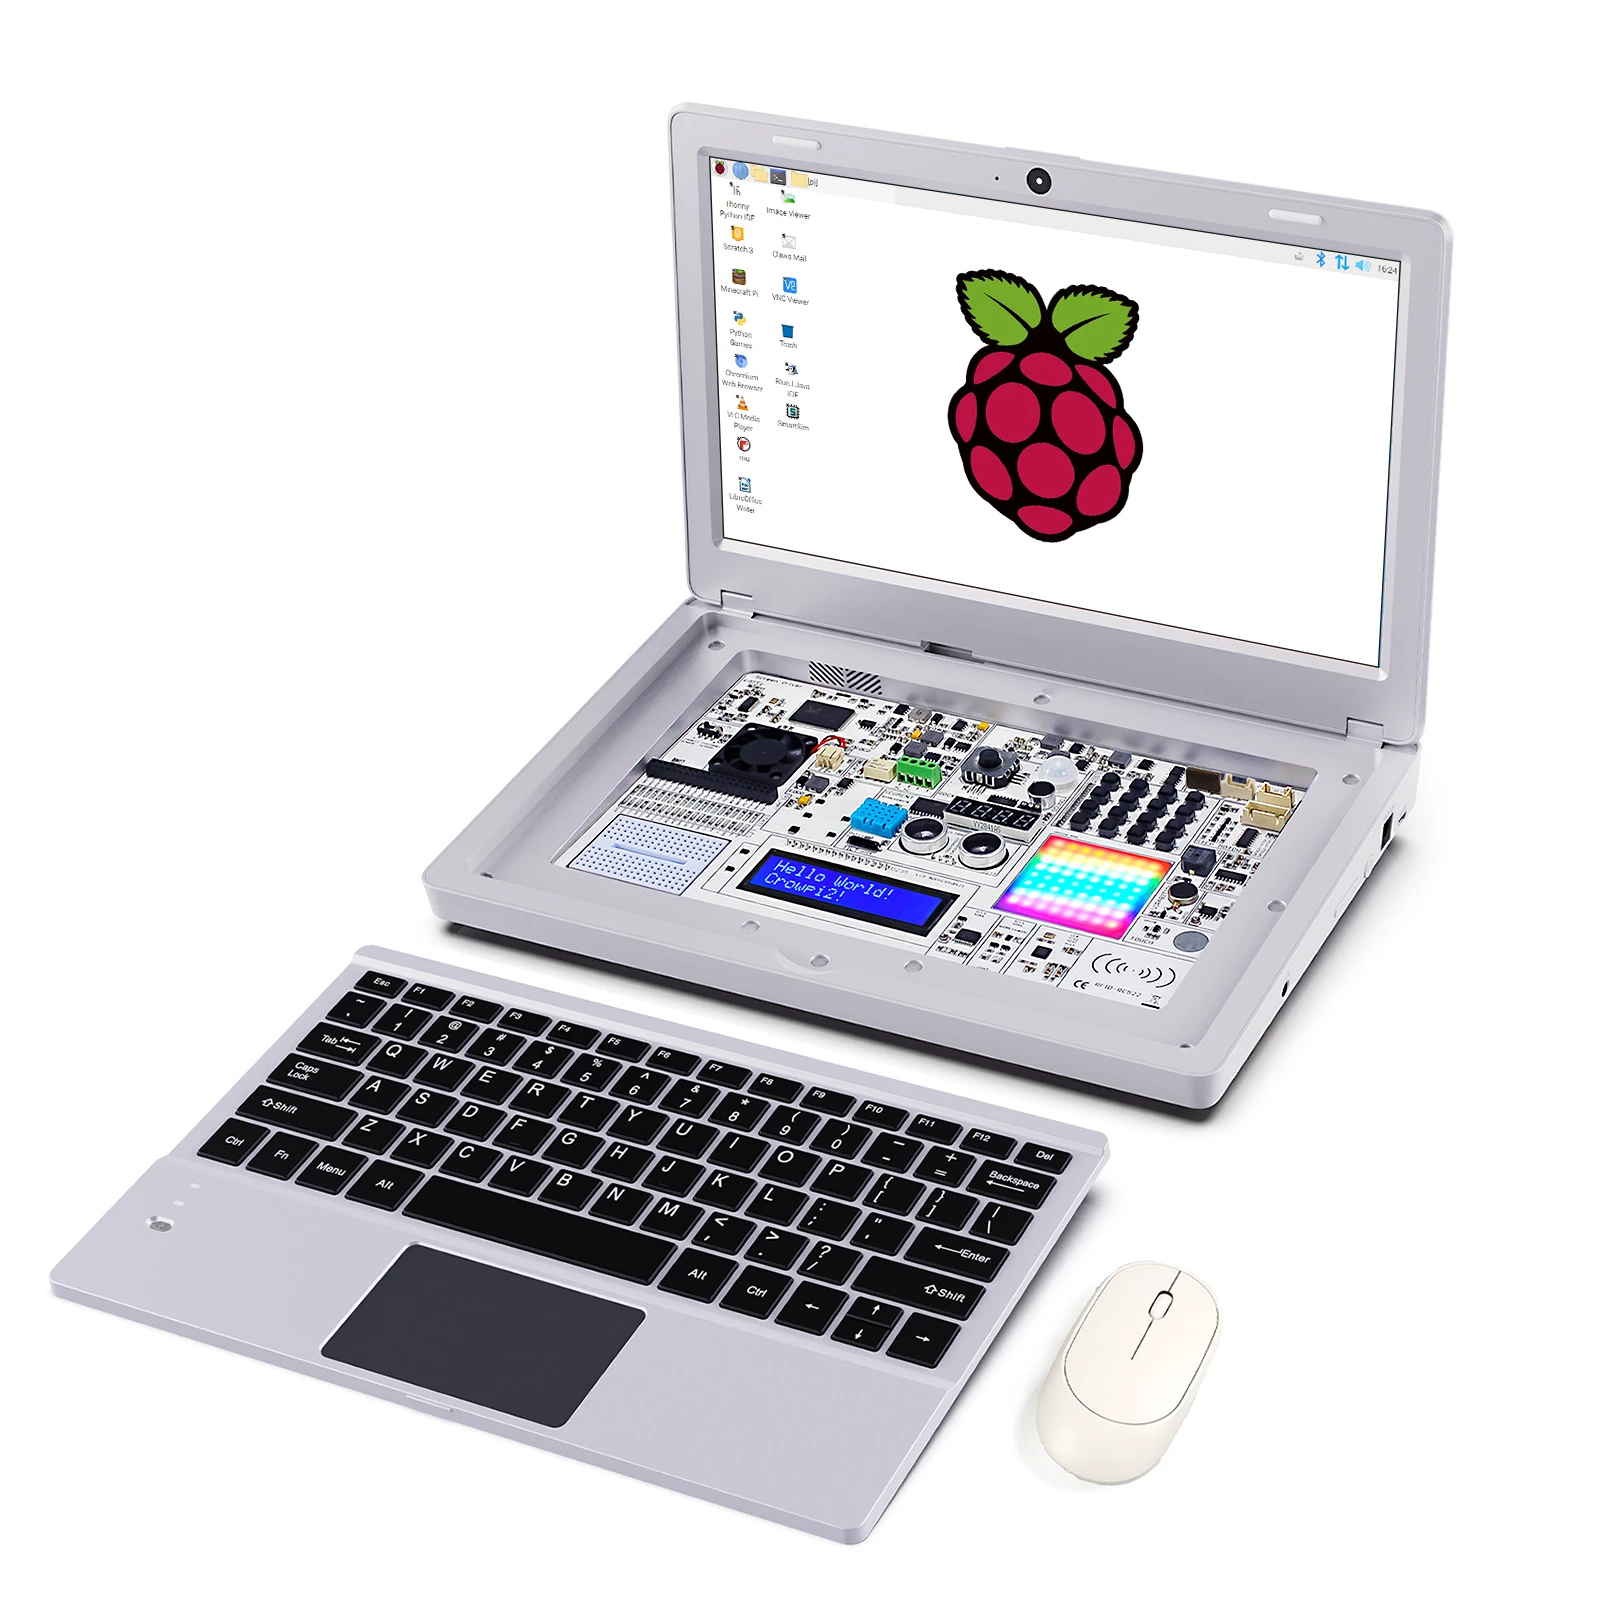 World's first Raspberry Pi Laptop - CrowPi